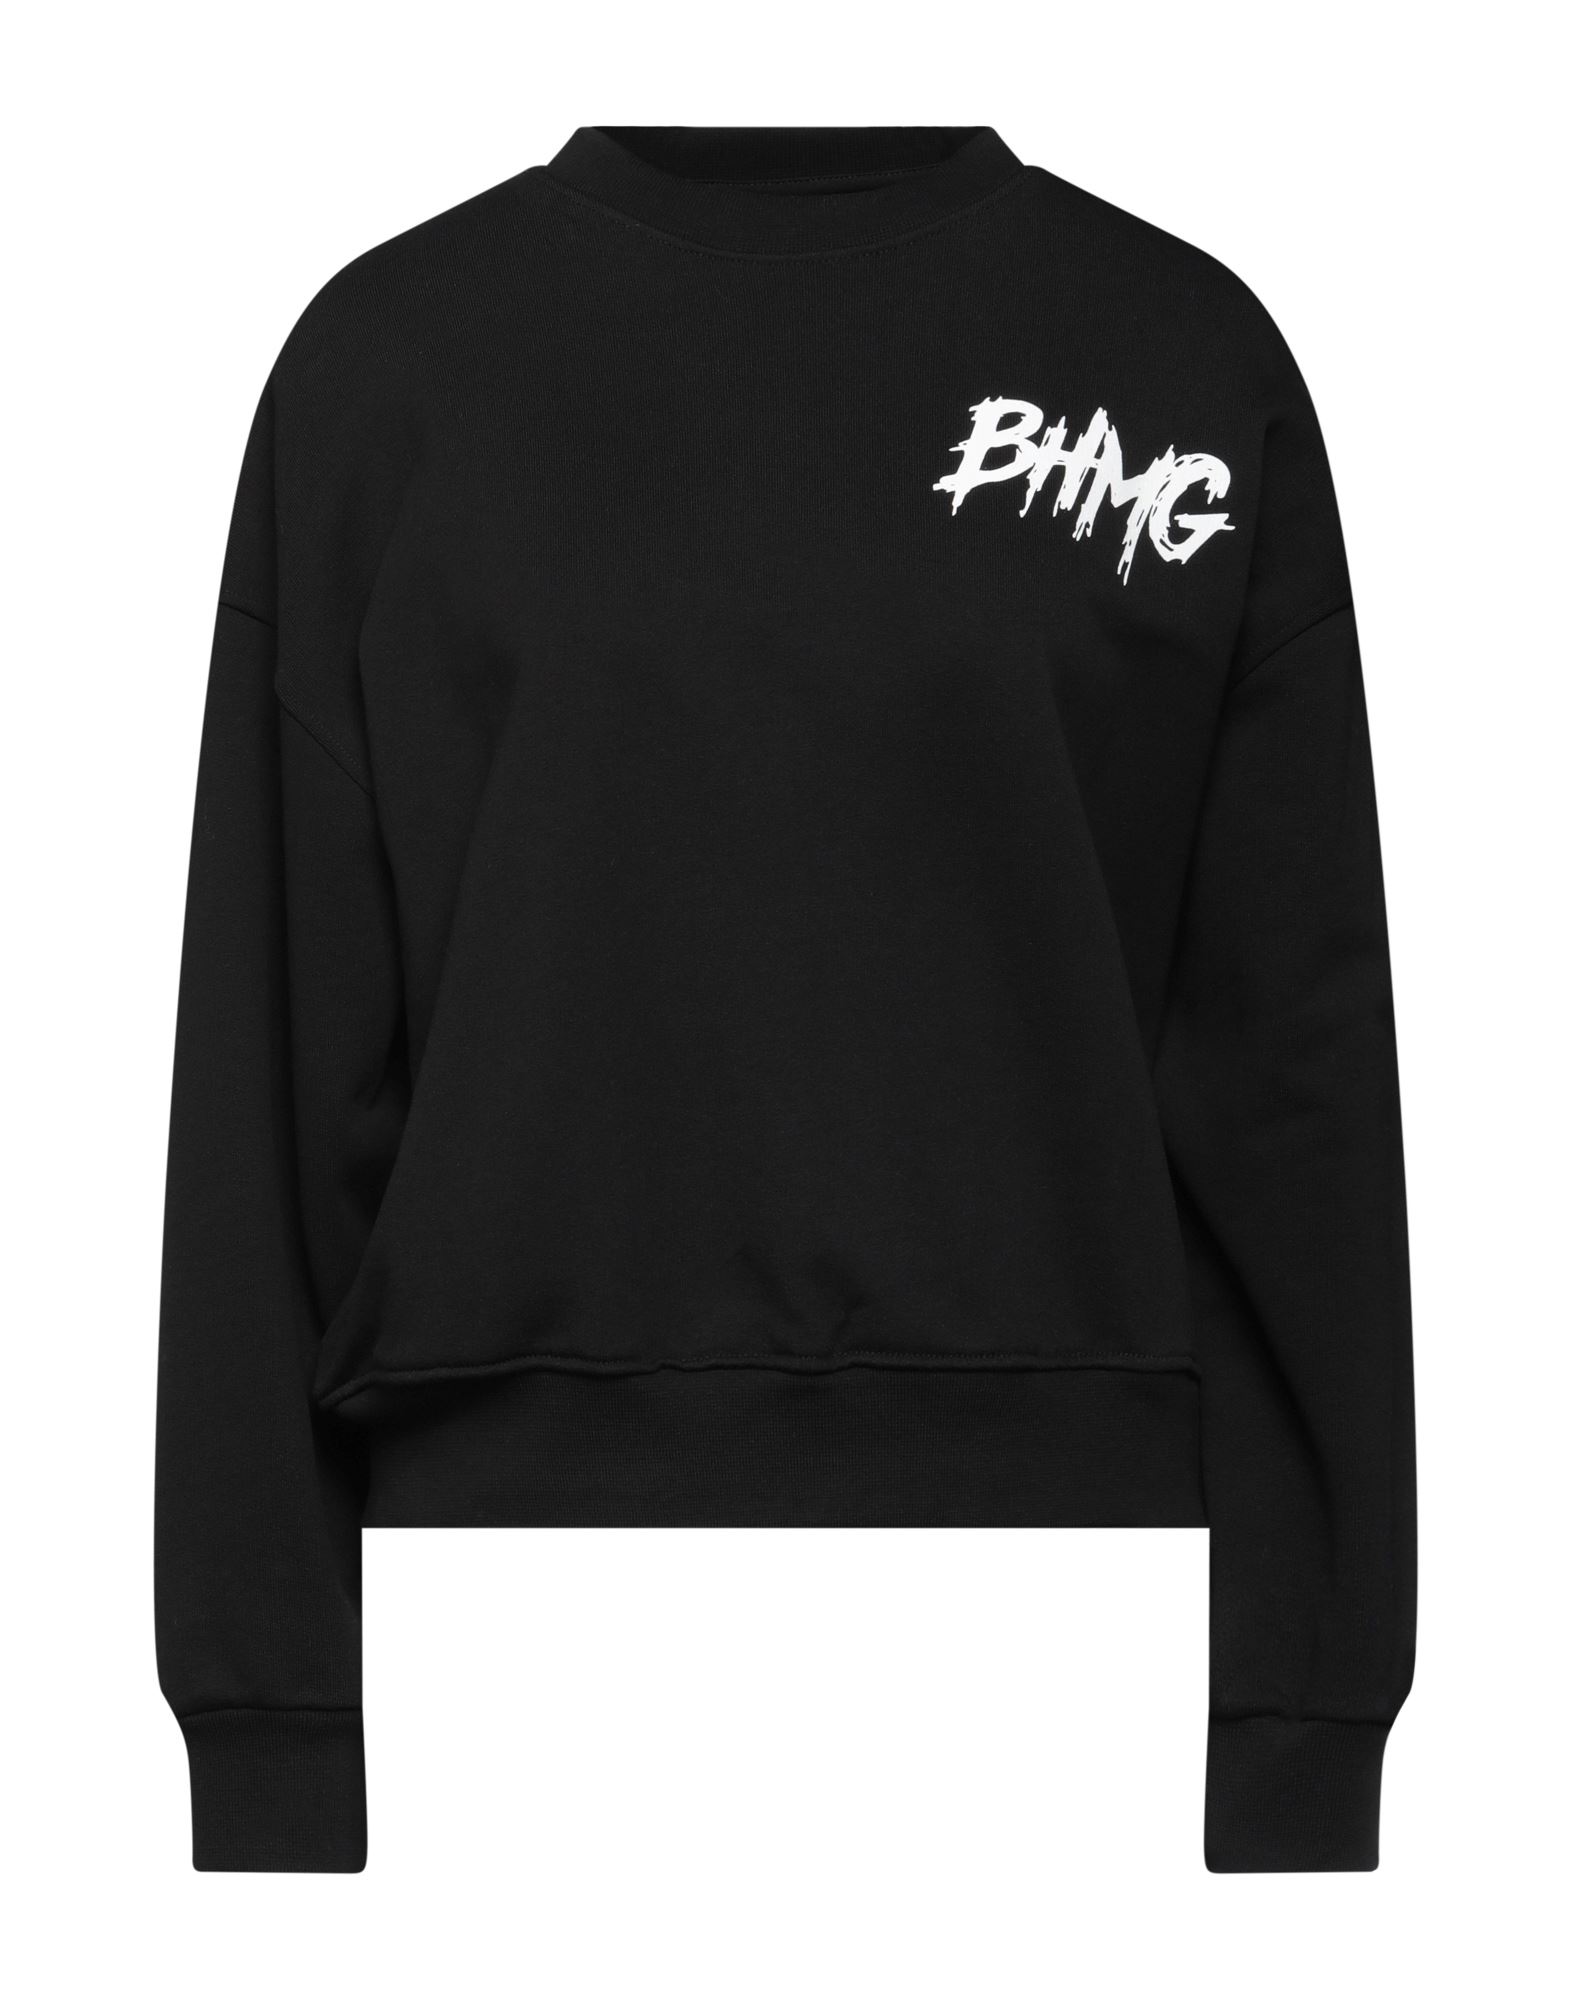 BHMG Sweatshirts